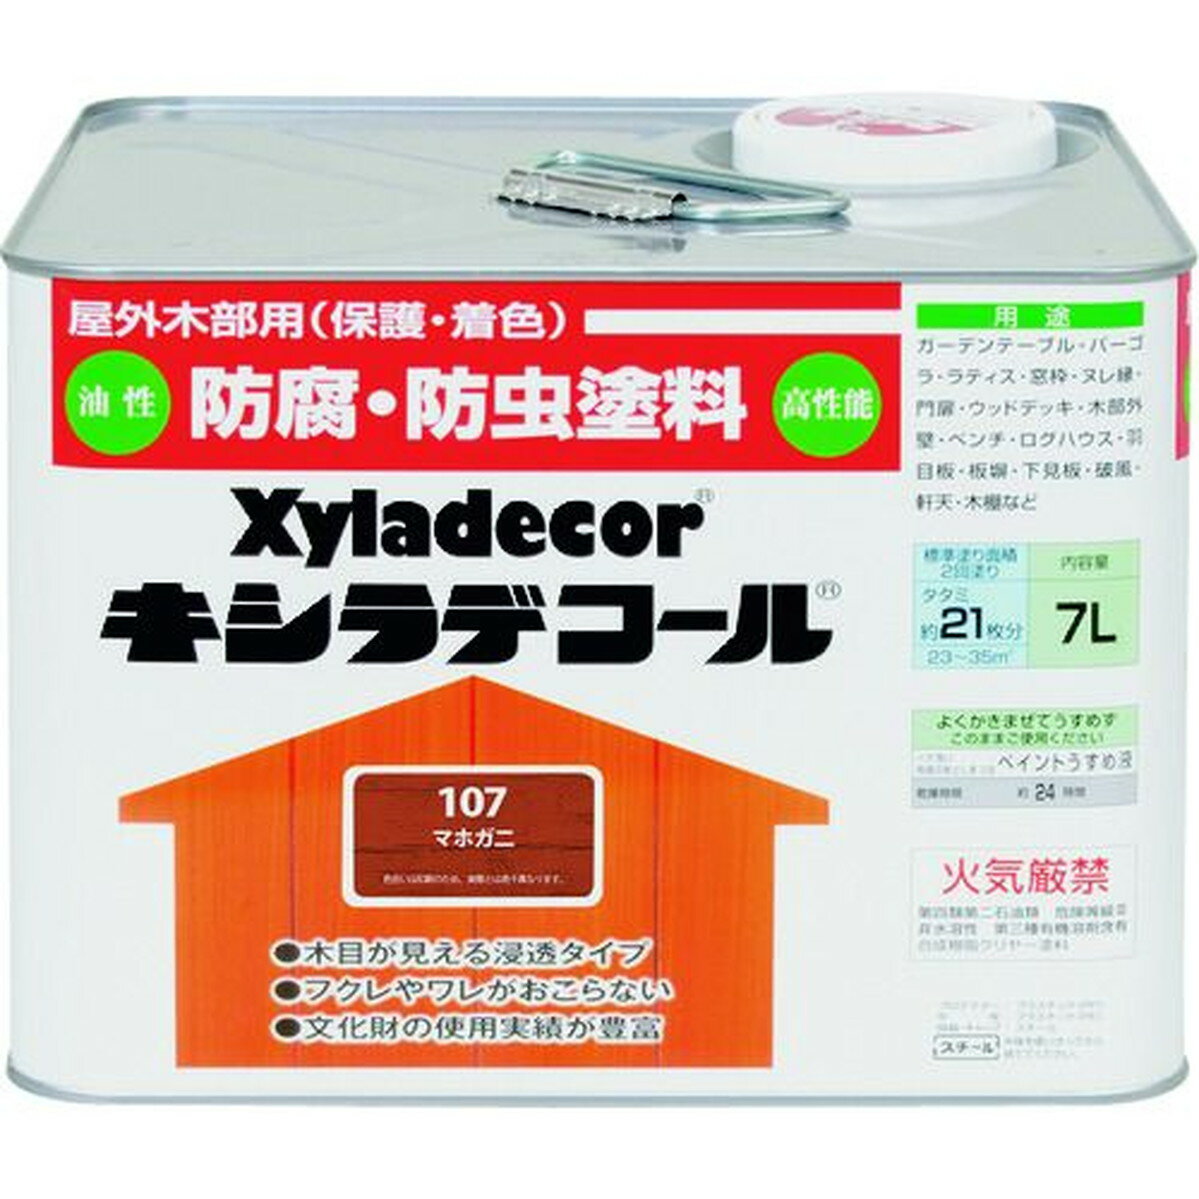 KANSAI キシラデコール マホガニ 7L 1缶 (00017670390000)